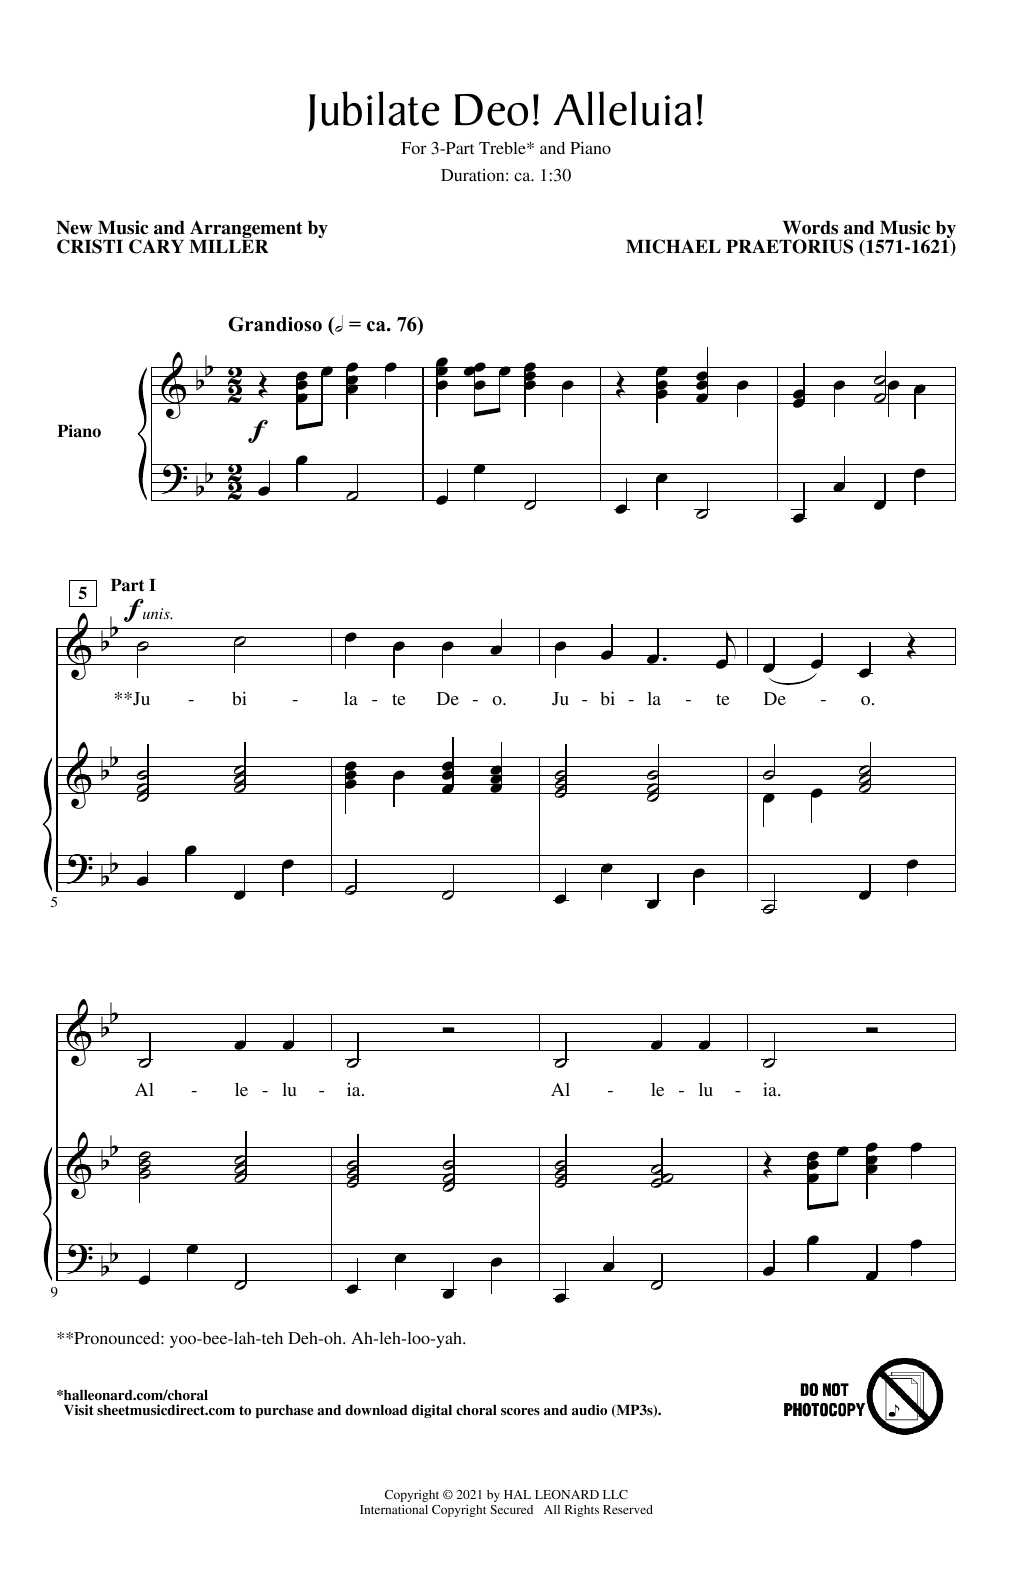 Michael Praetorious Jubilate Deo! Alleluia! (arr. Cristi Cary Miller) Sheet Music Notes & Chords for 3-Part Treble Choir - Download or Print PDF